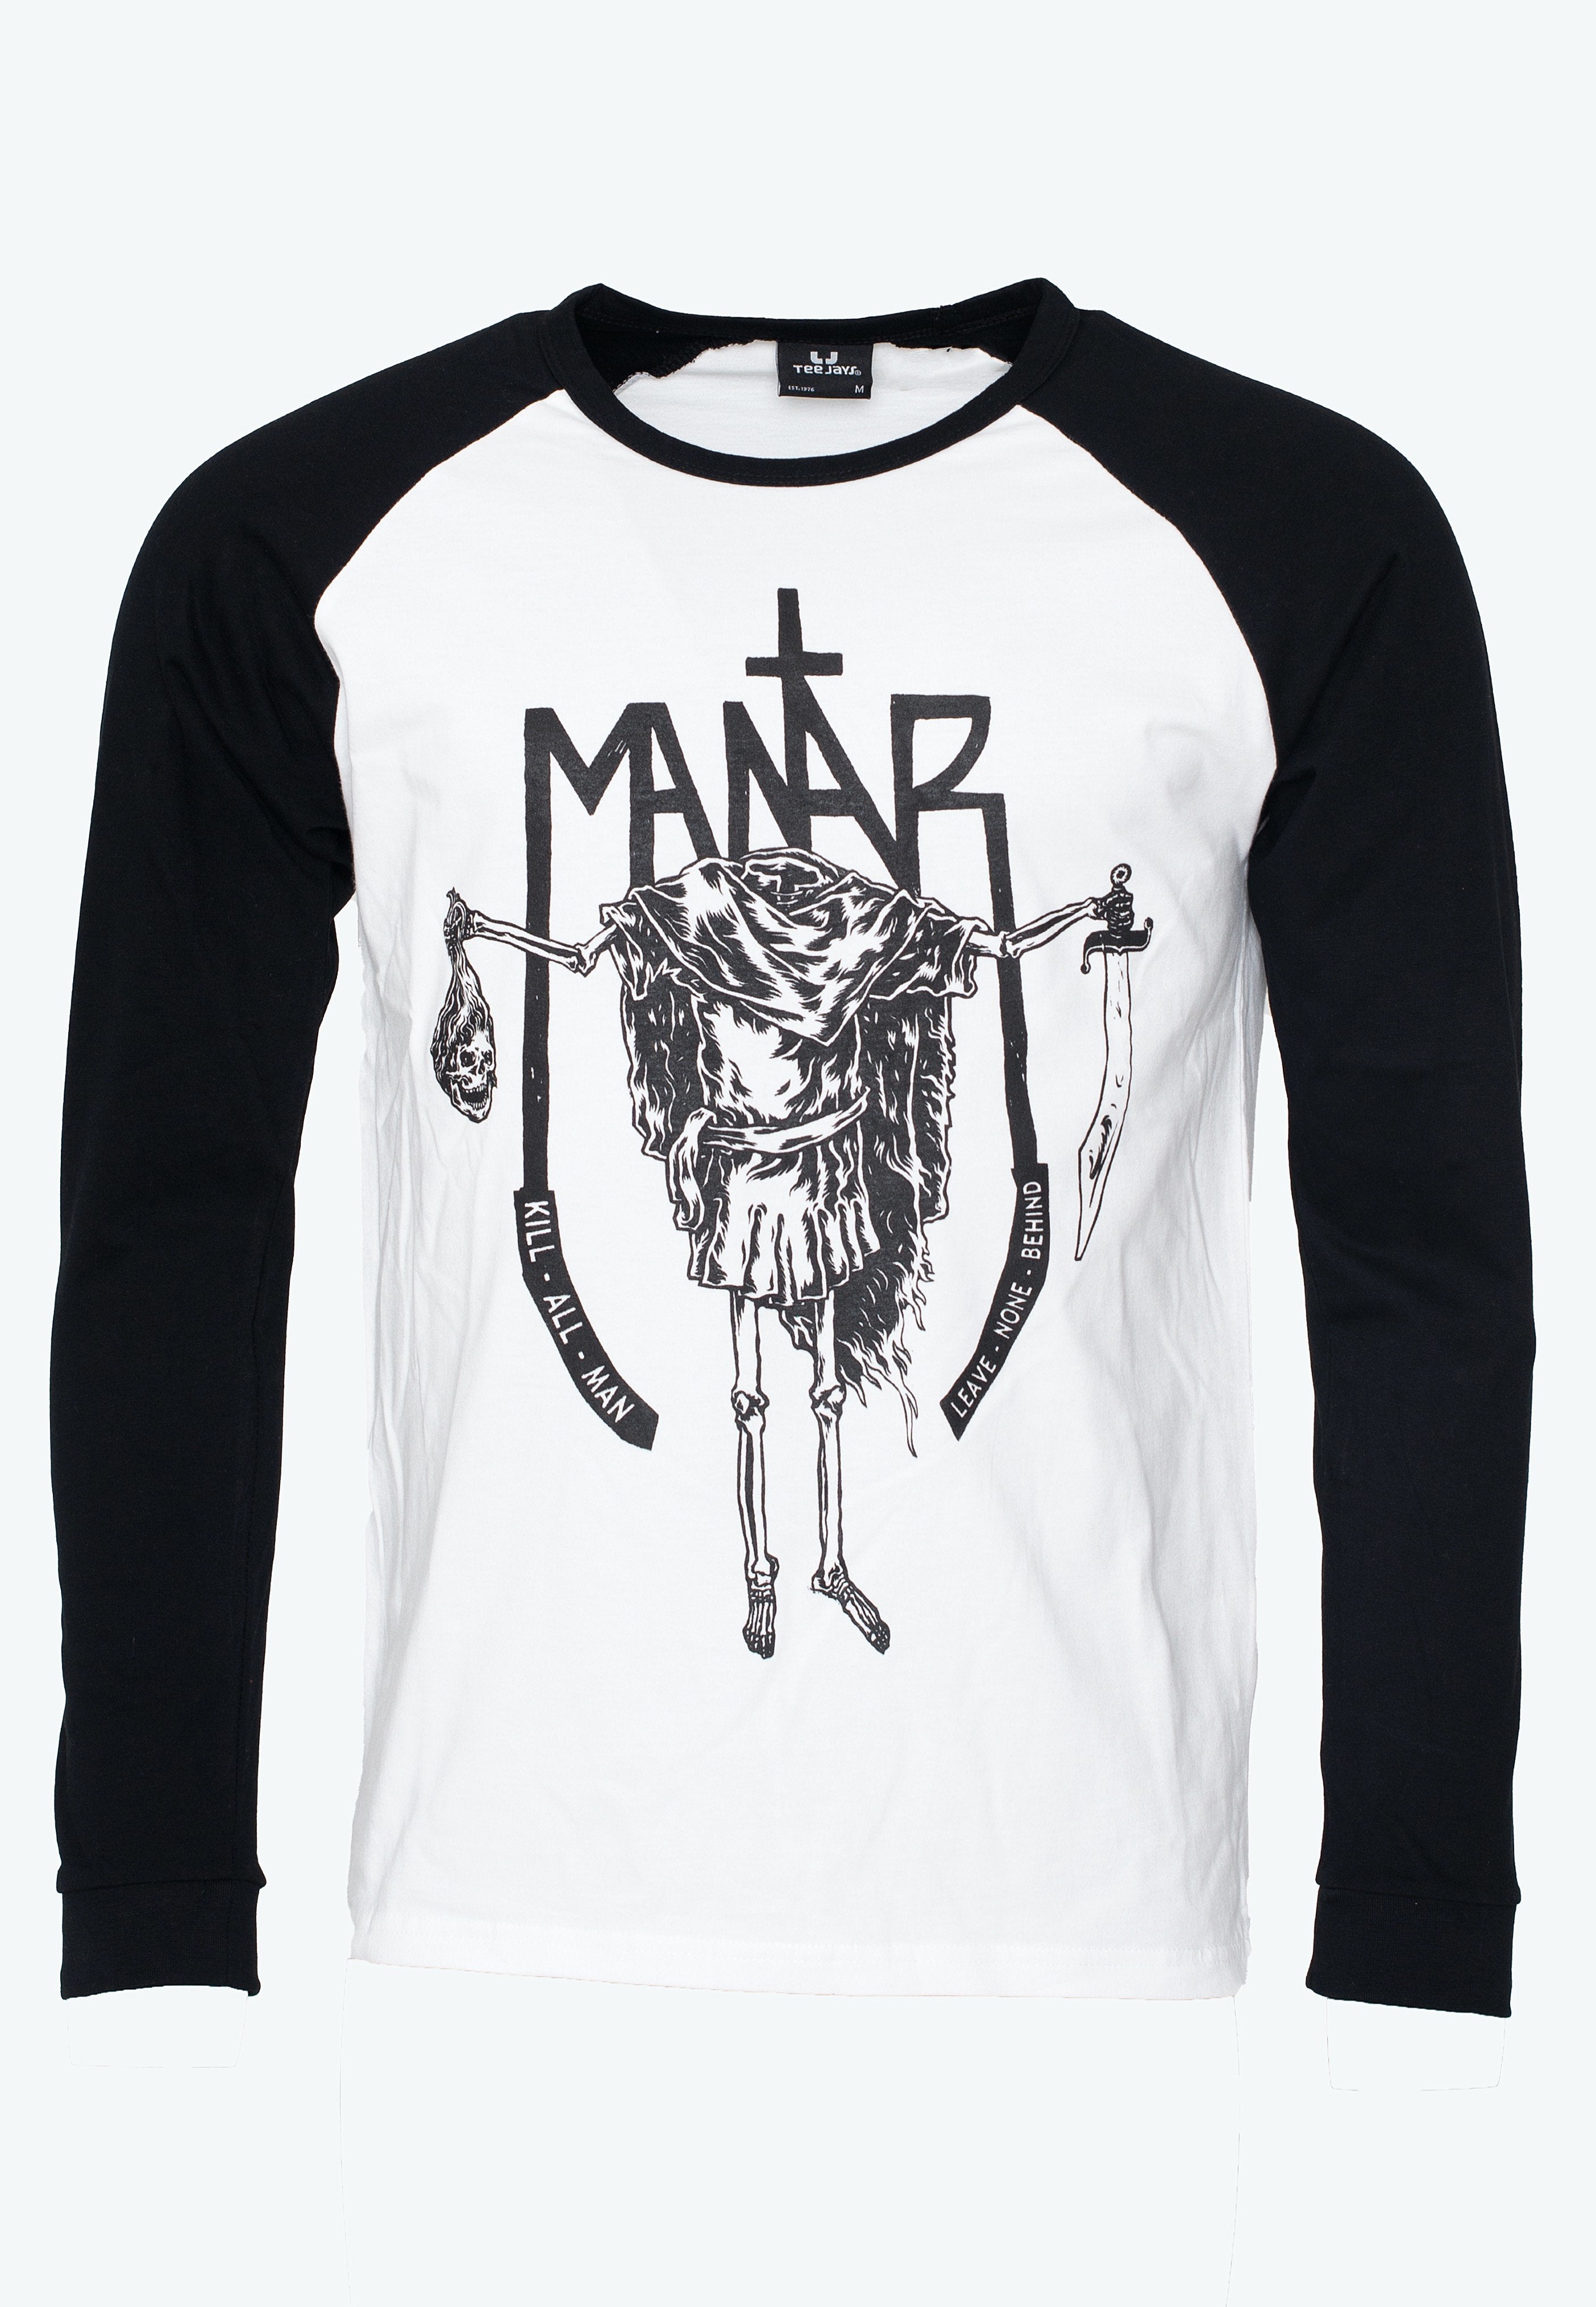 Mantar - Kill All Man White/Black - Longsleeve